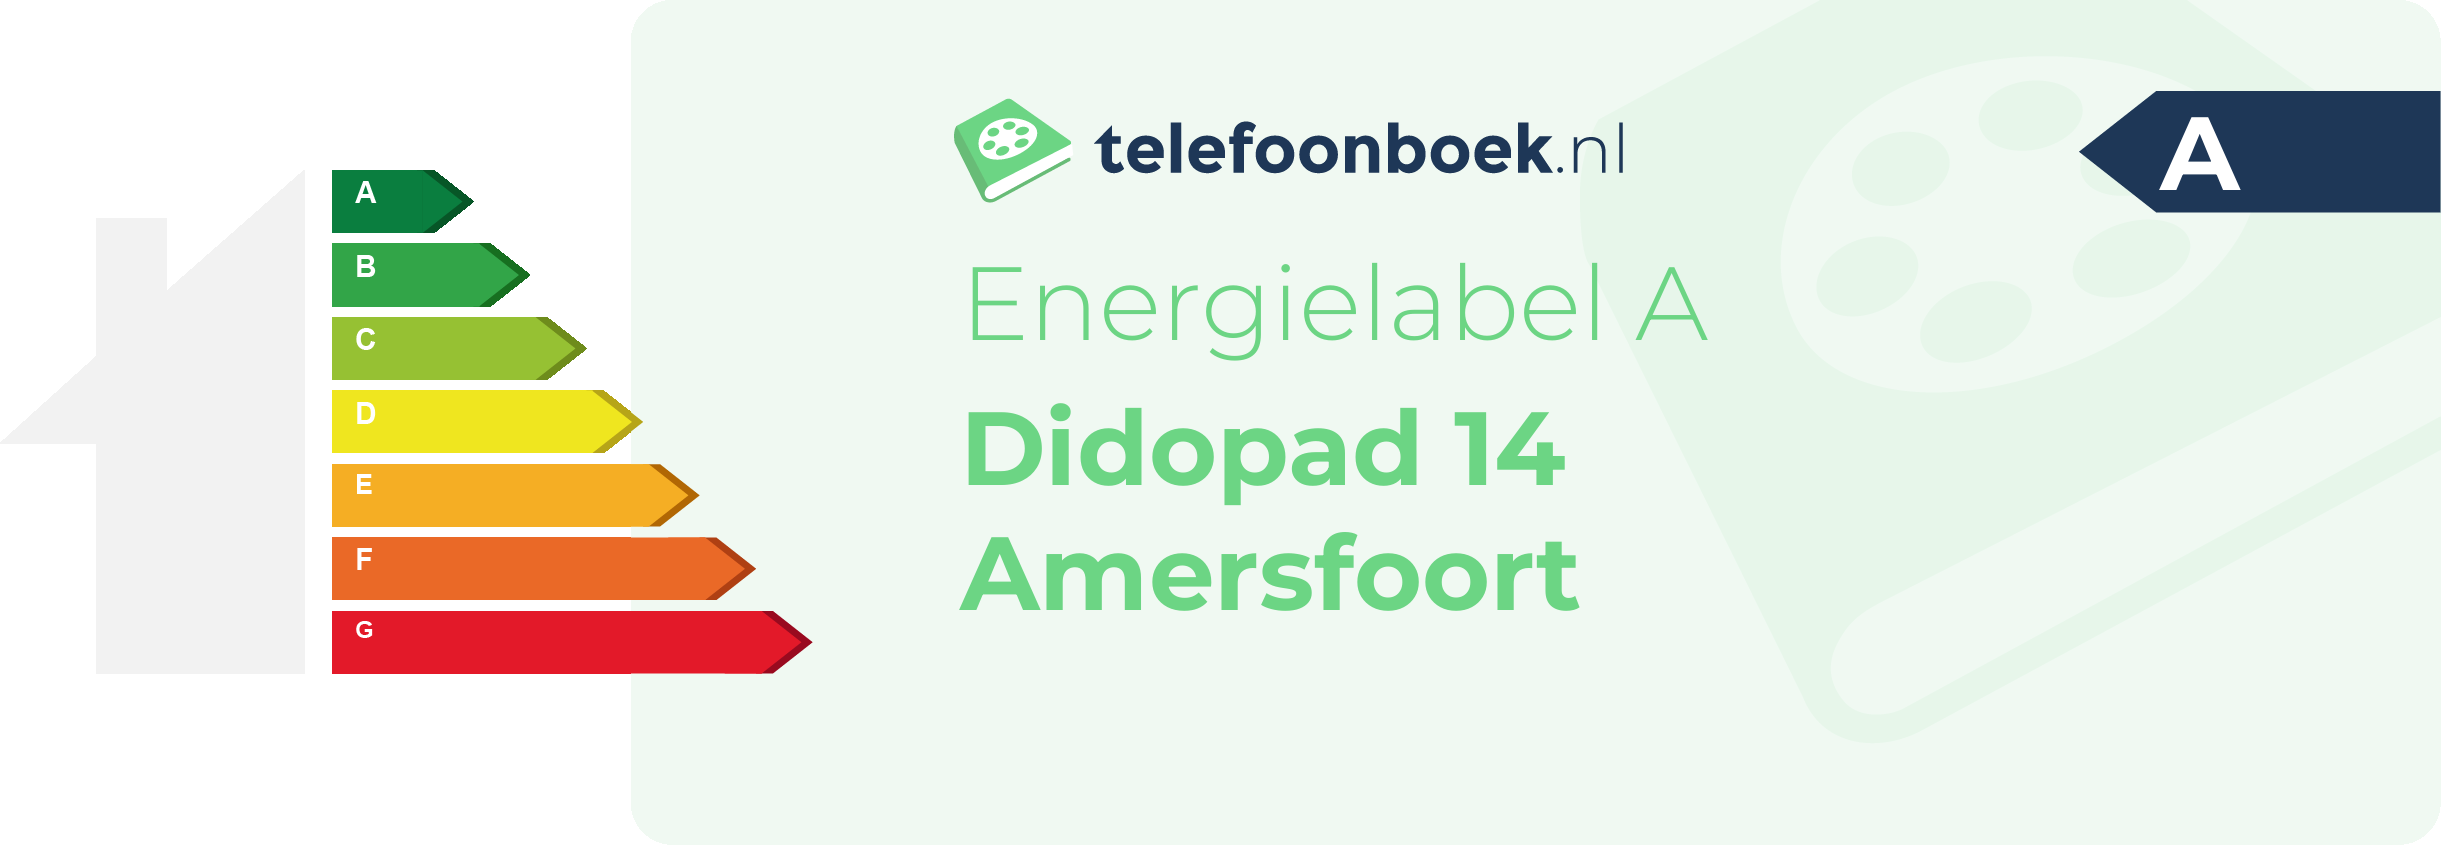 Energielabel Didopad 14 Amersfoort